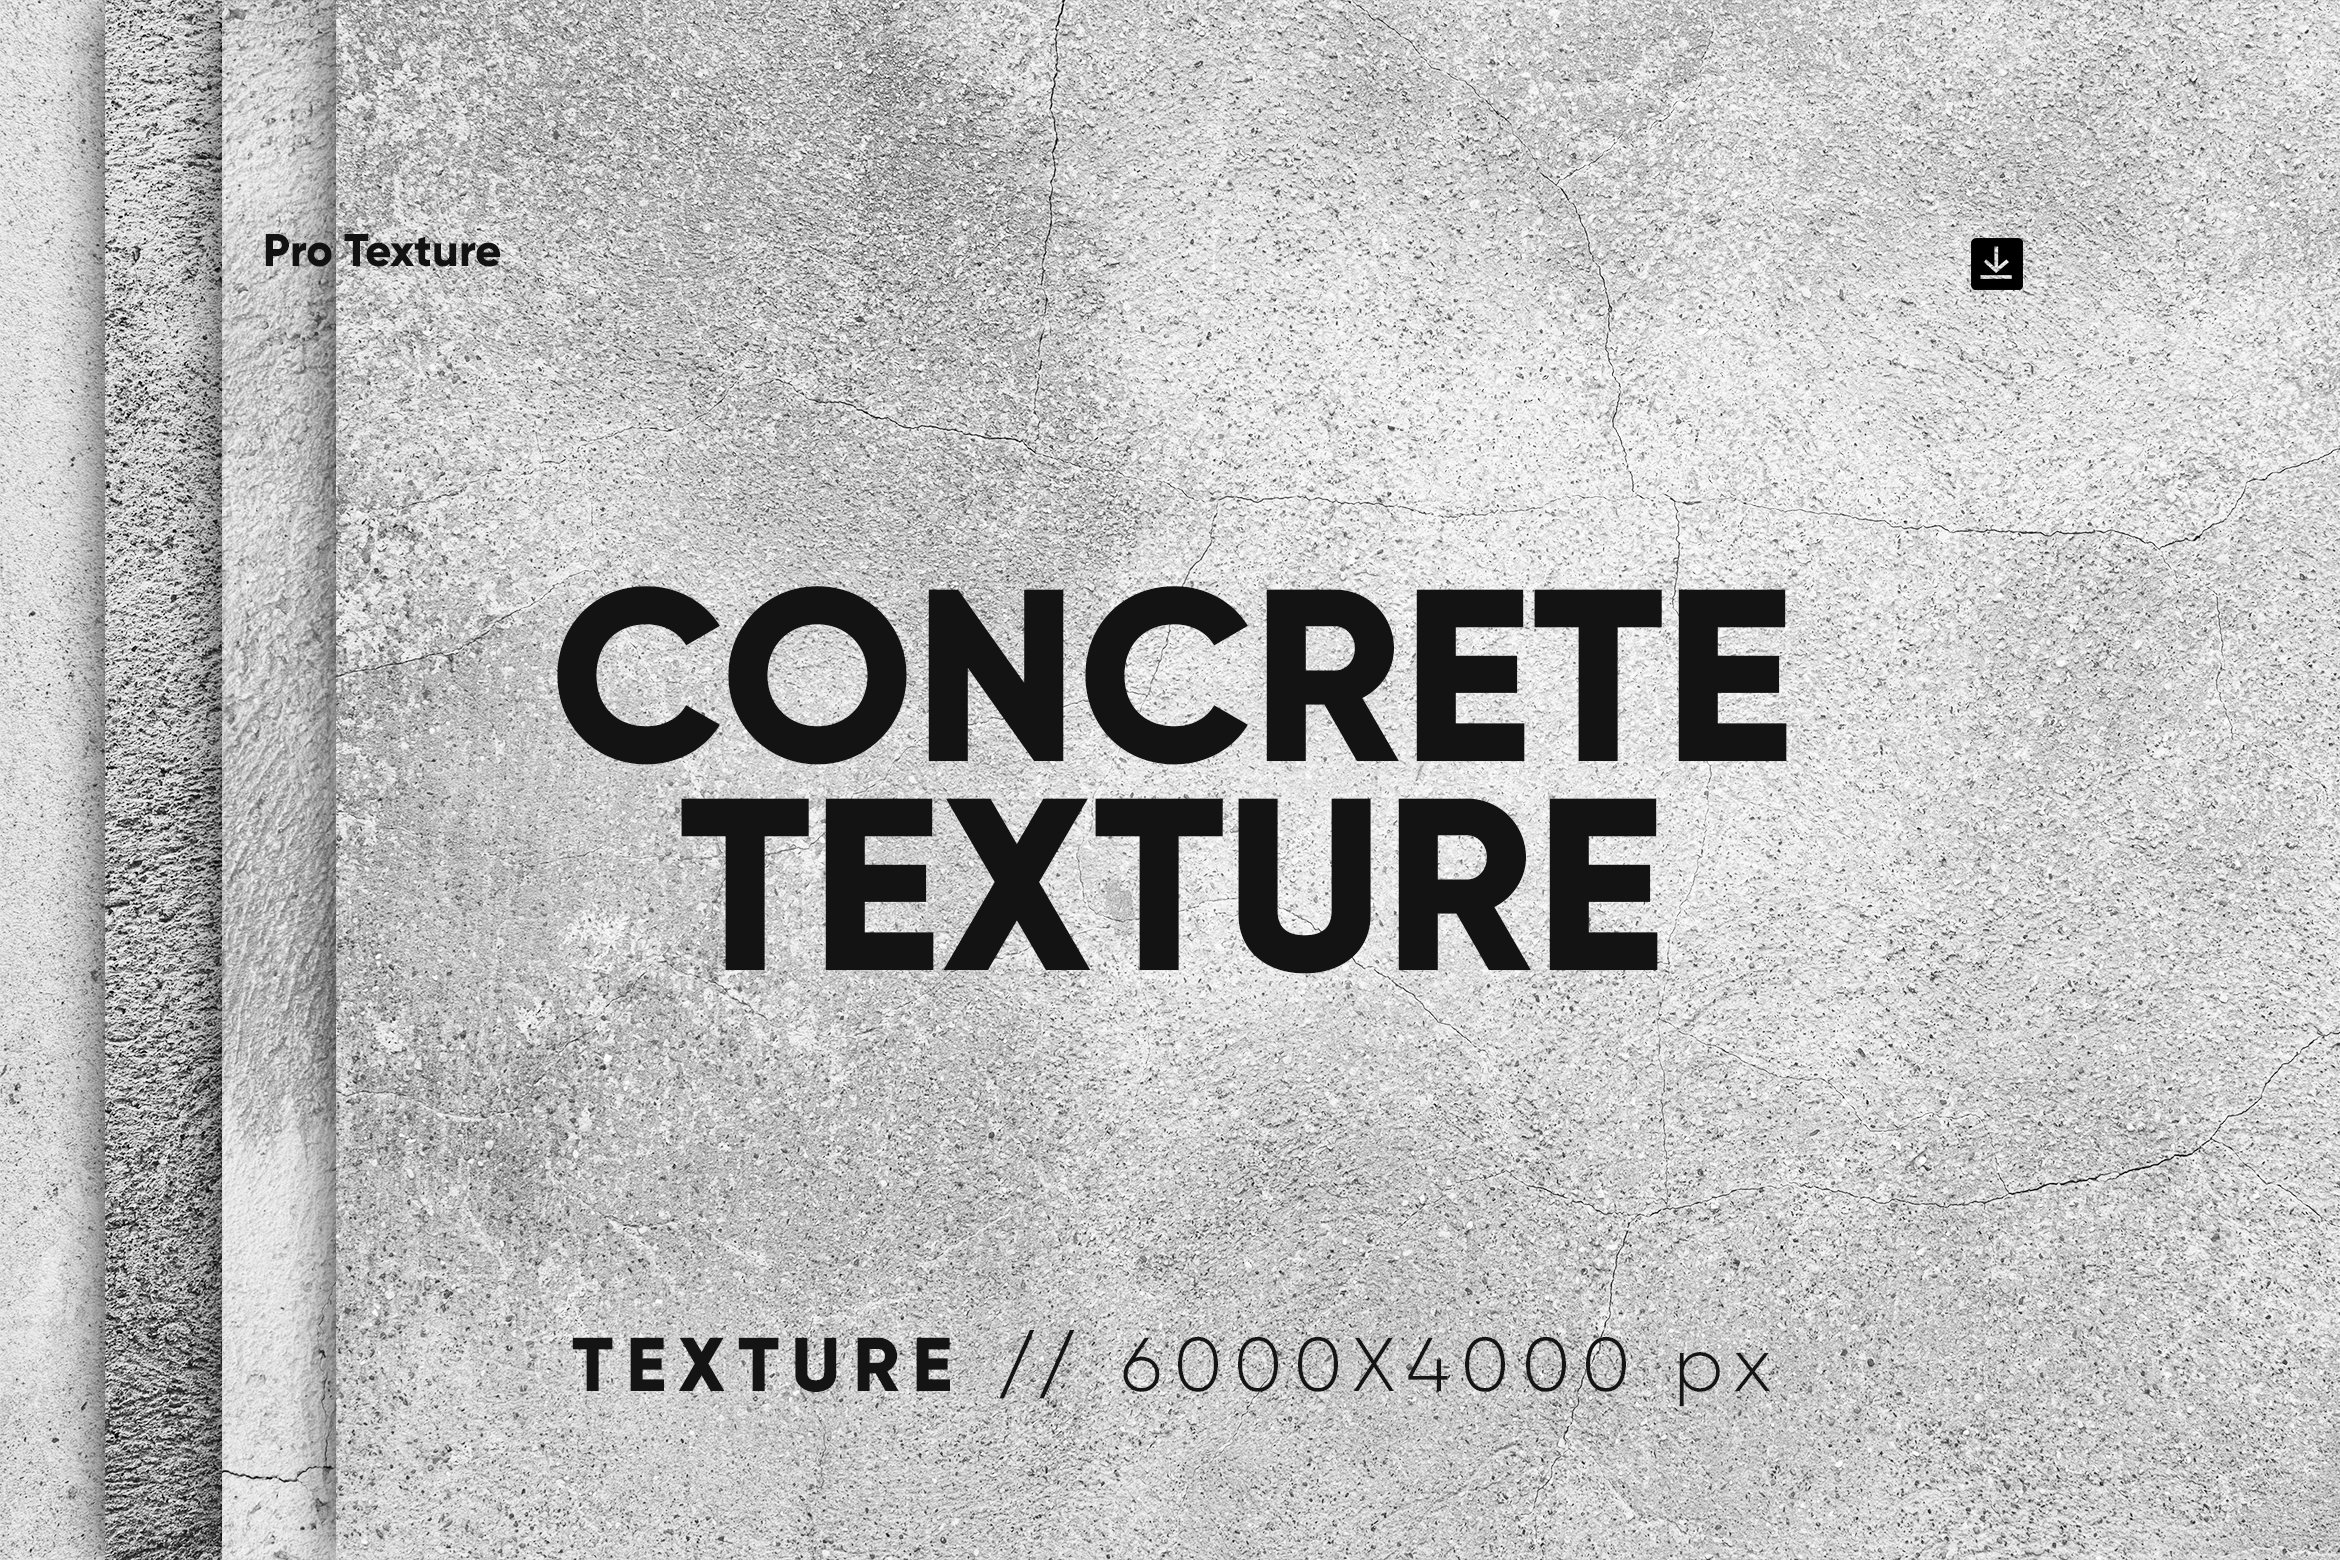 25 Concrete Texture cover image.